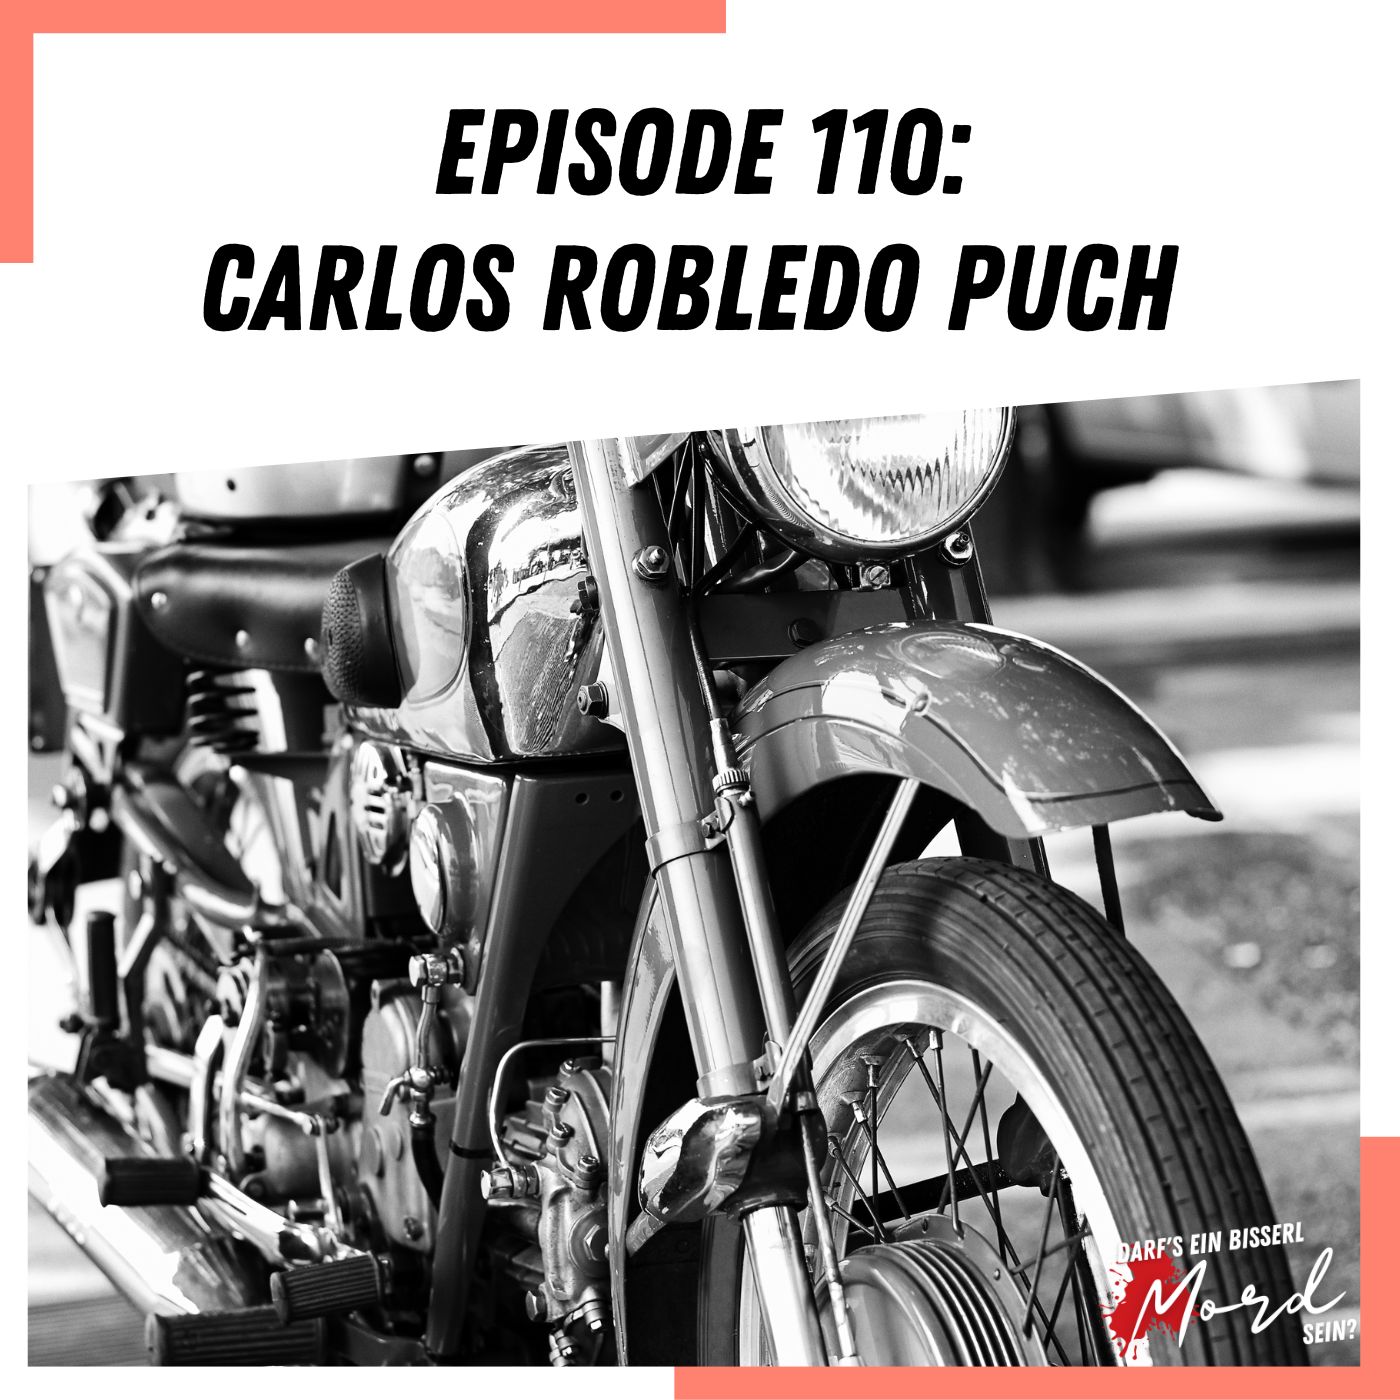 Episode 110: Carlos Eduardo Robledo Puch